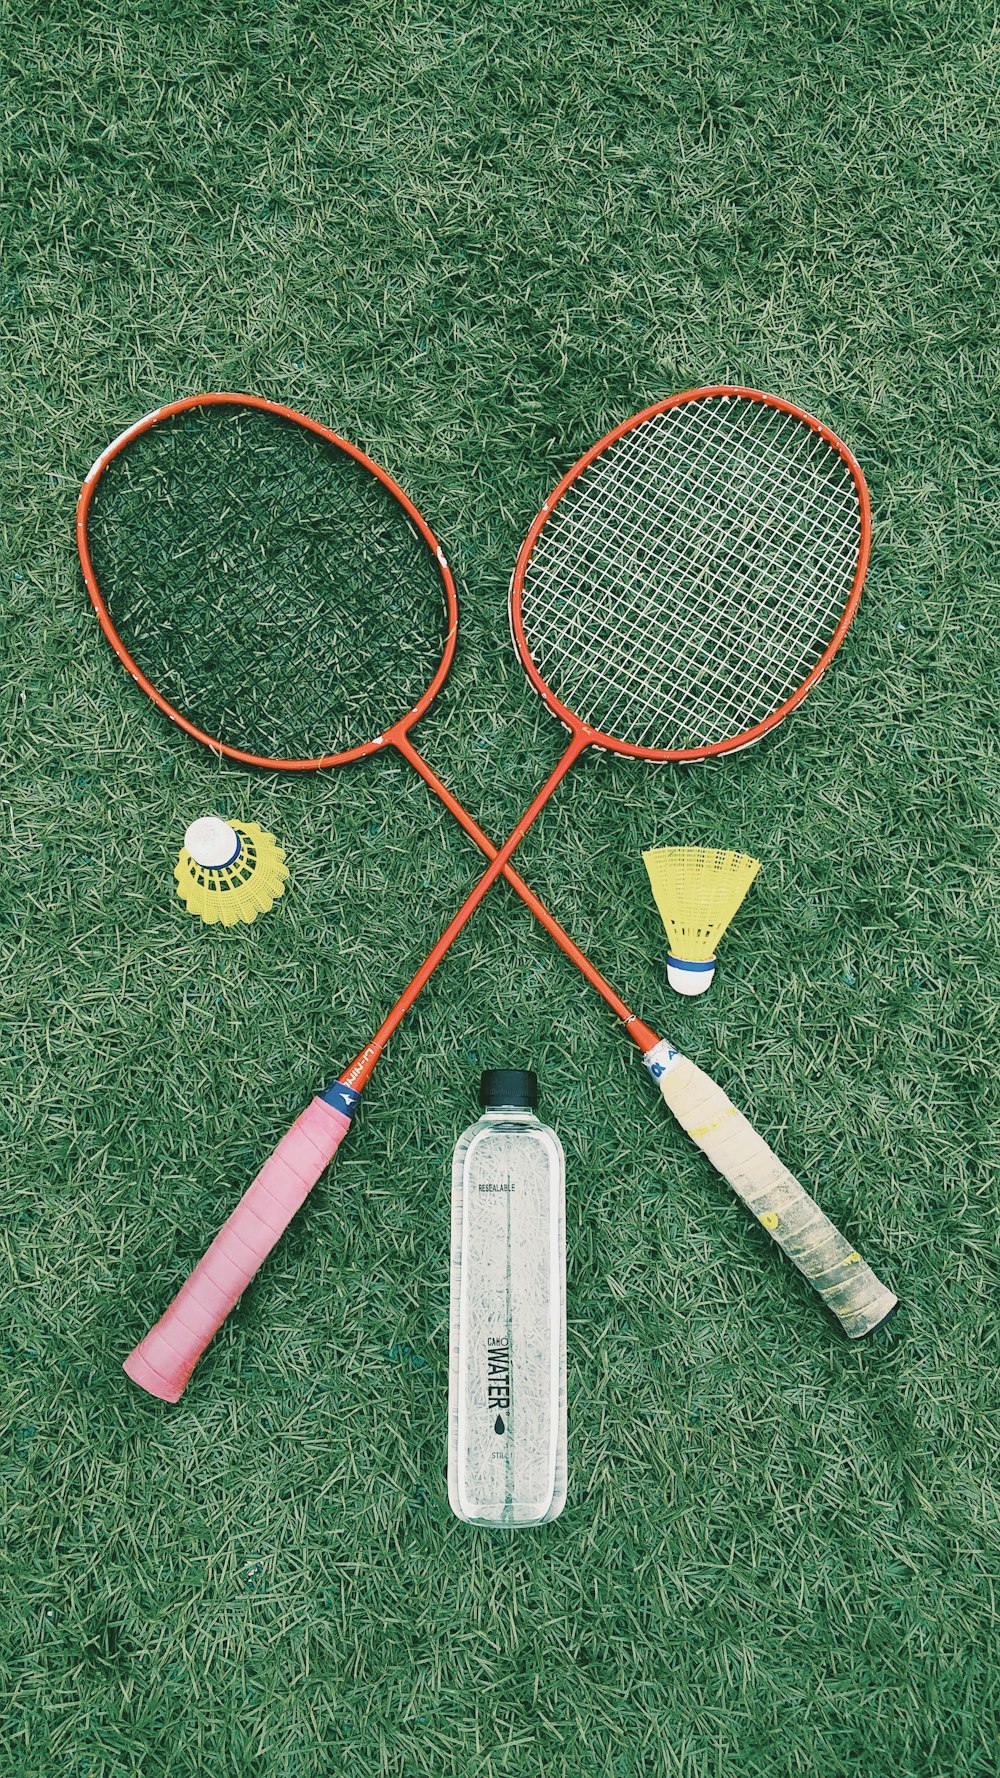 500+ Badminton Pictures [HQ] | Download Free Images on Unsplash